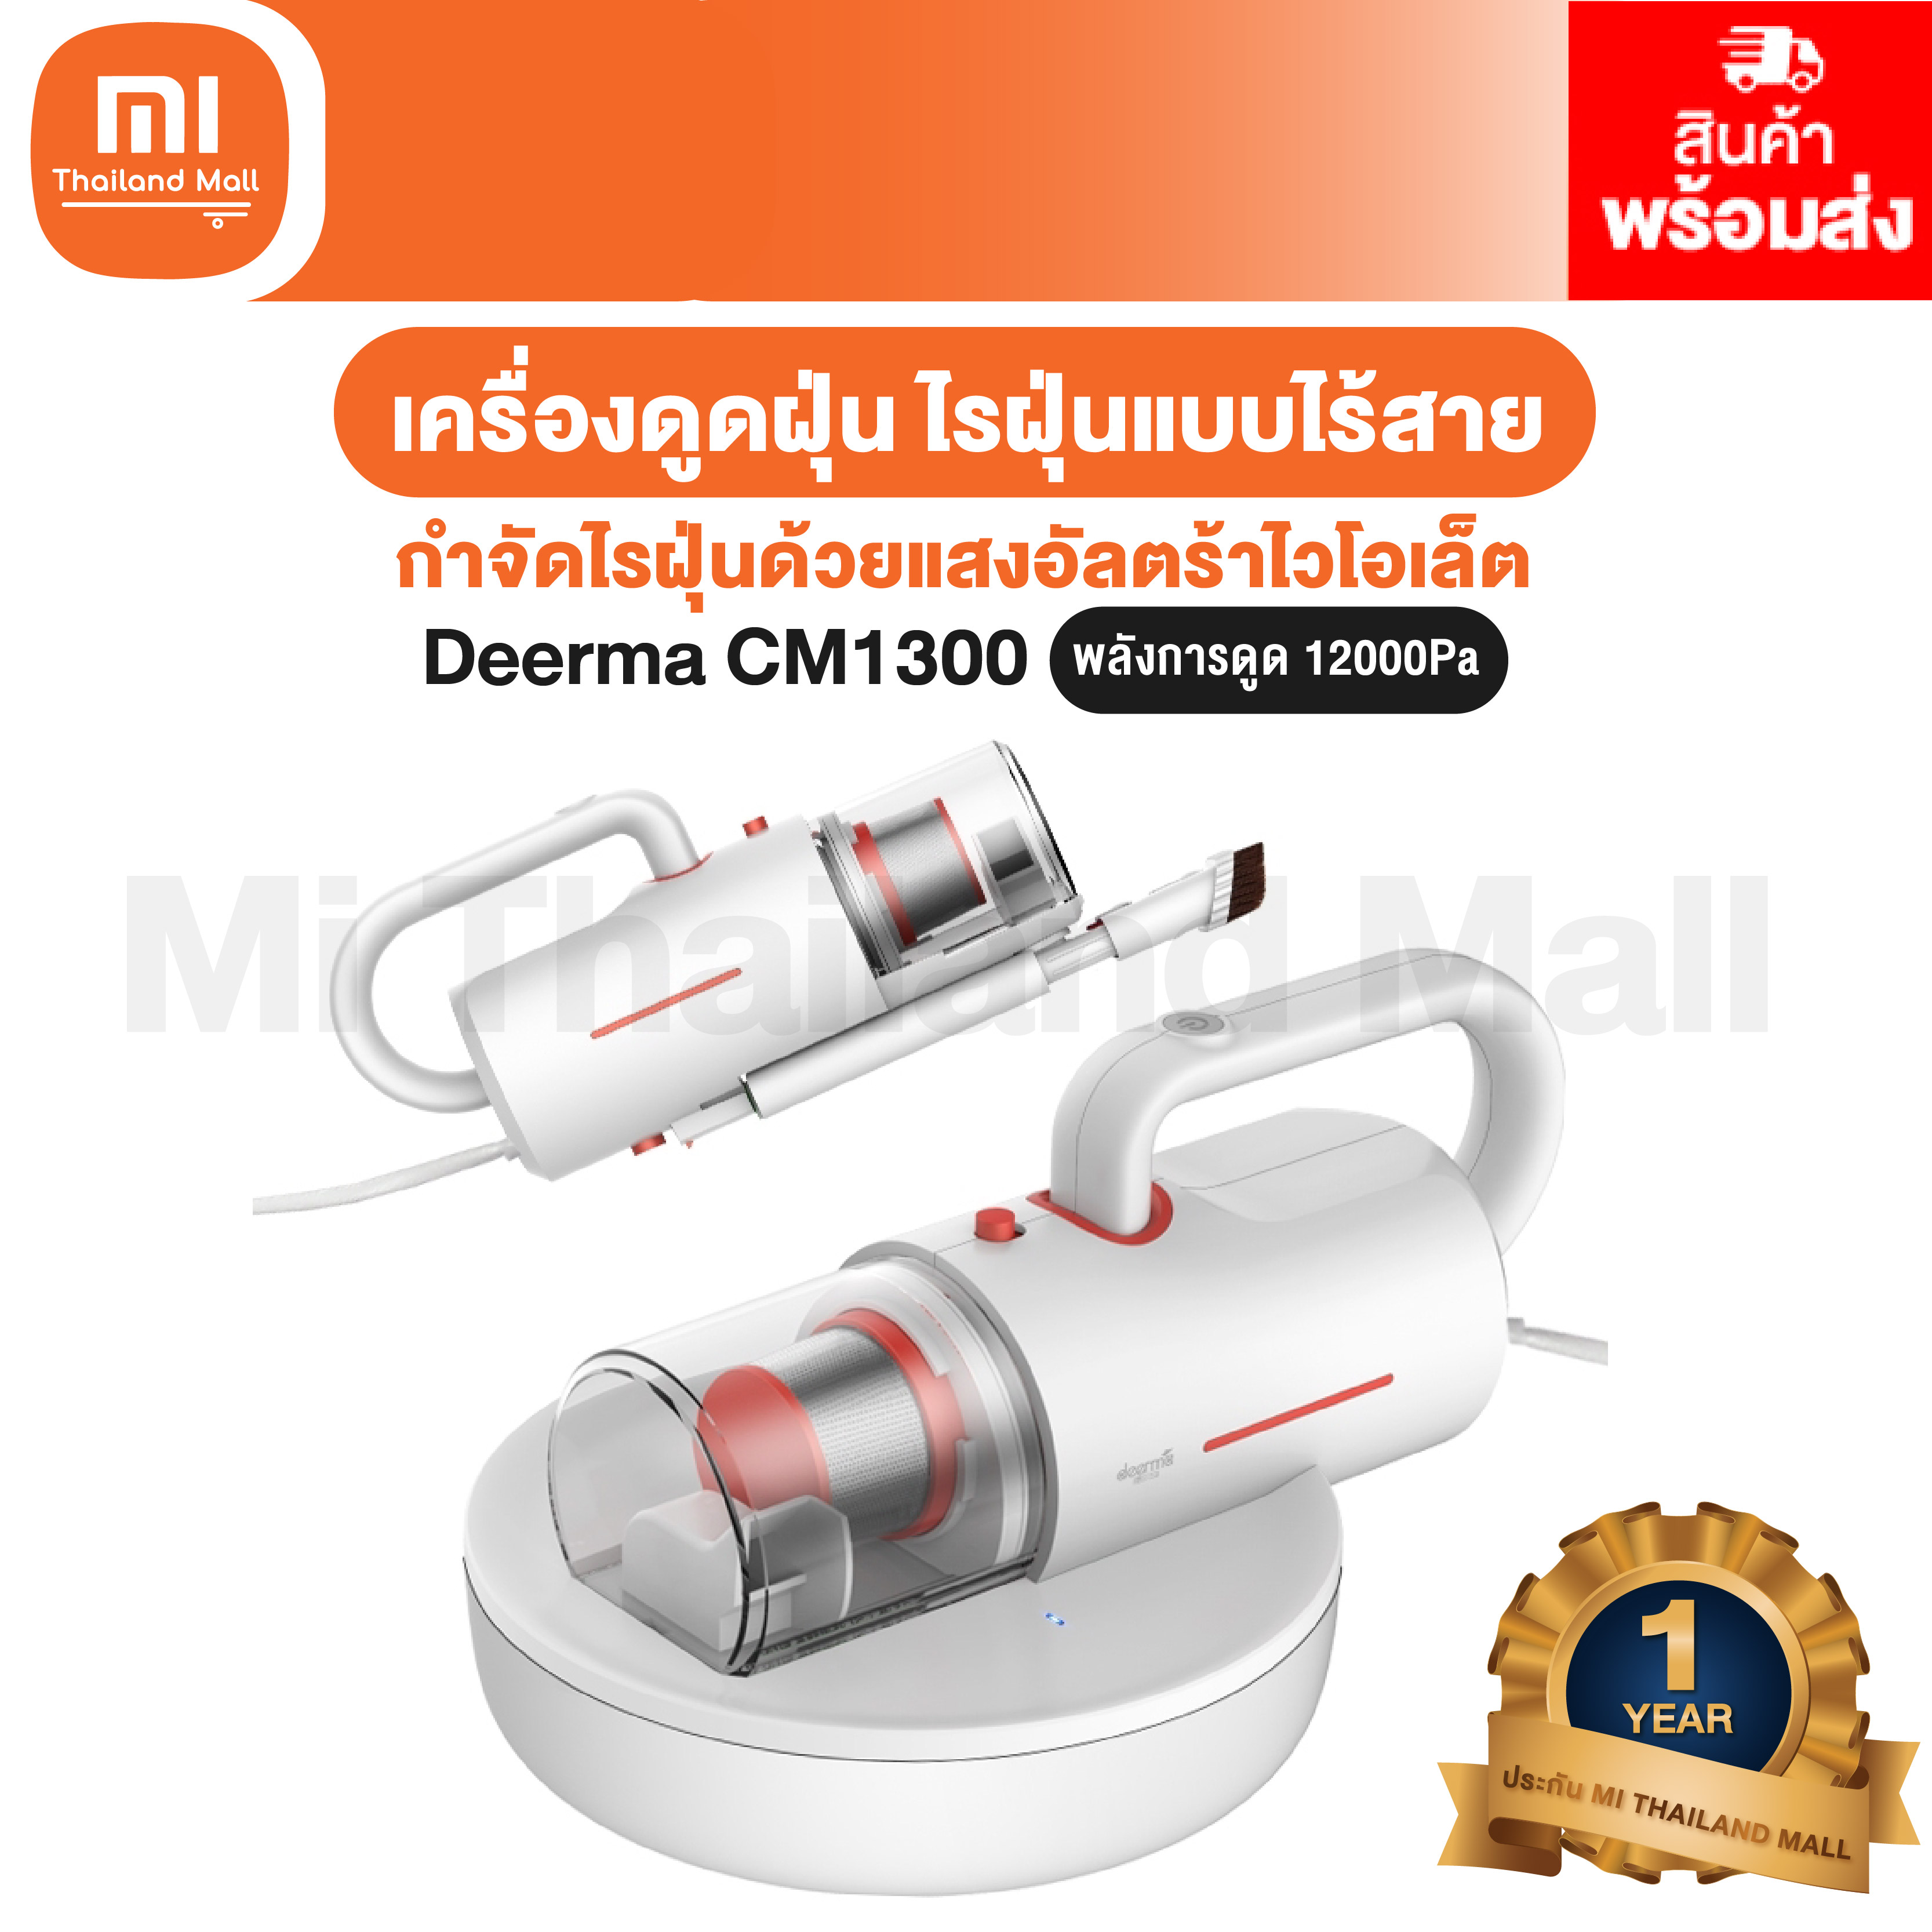 Xiaomi Deerma CM1300 Anti-Mites Vacuum Cleaner เครื่องดูดไรฝุ่นดูดฝุ่น- ประกันโดยMi Thailand Mall 1ปี ขาว